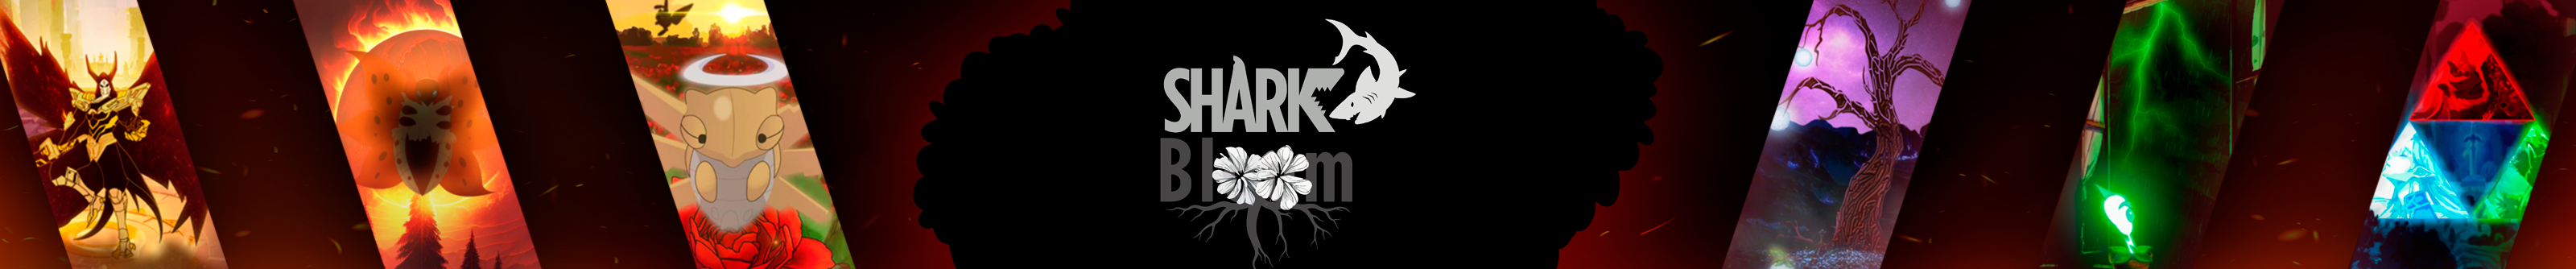 Shark Bloom's profile banner